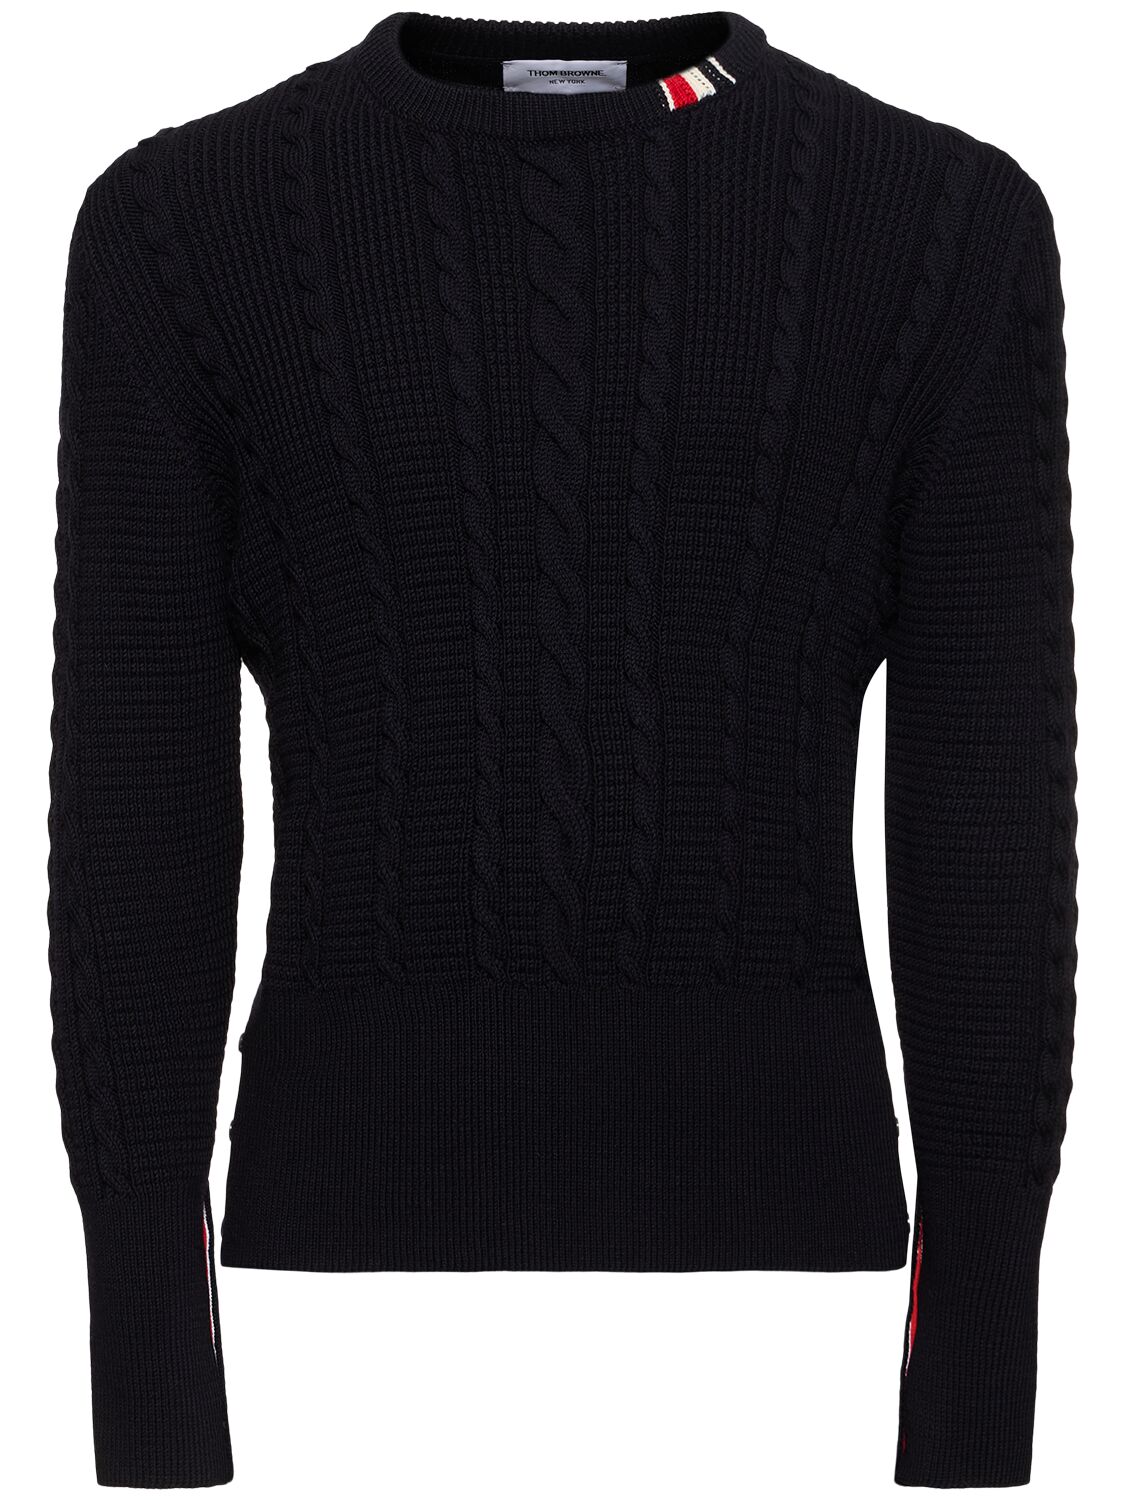 Thom Browne Navy Striped Sweater